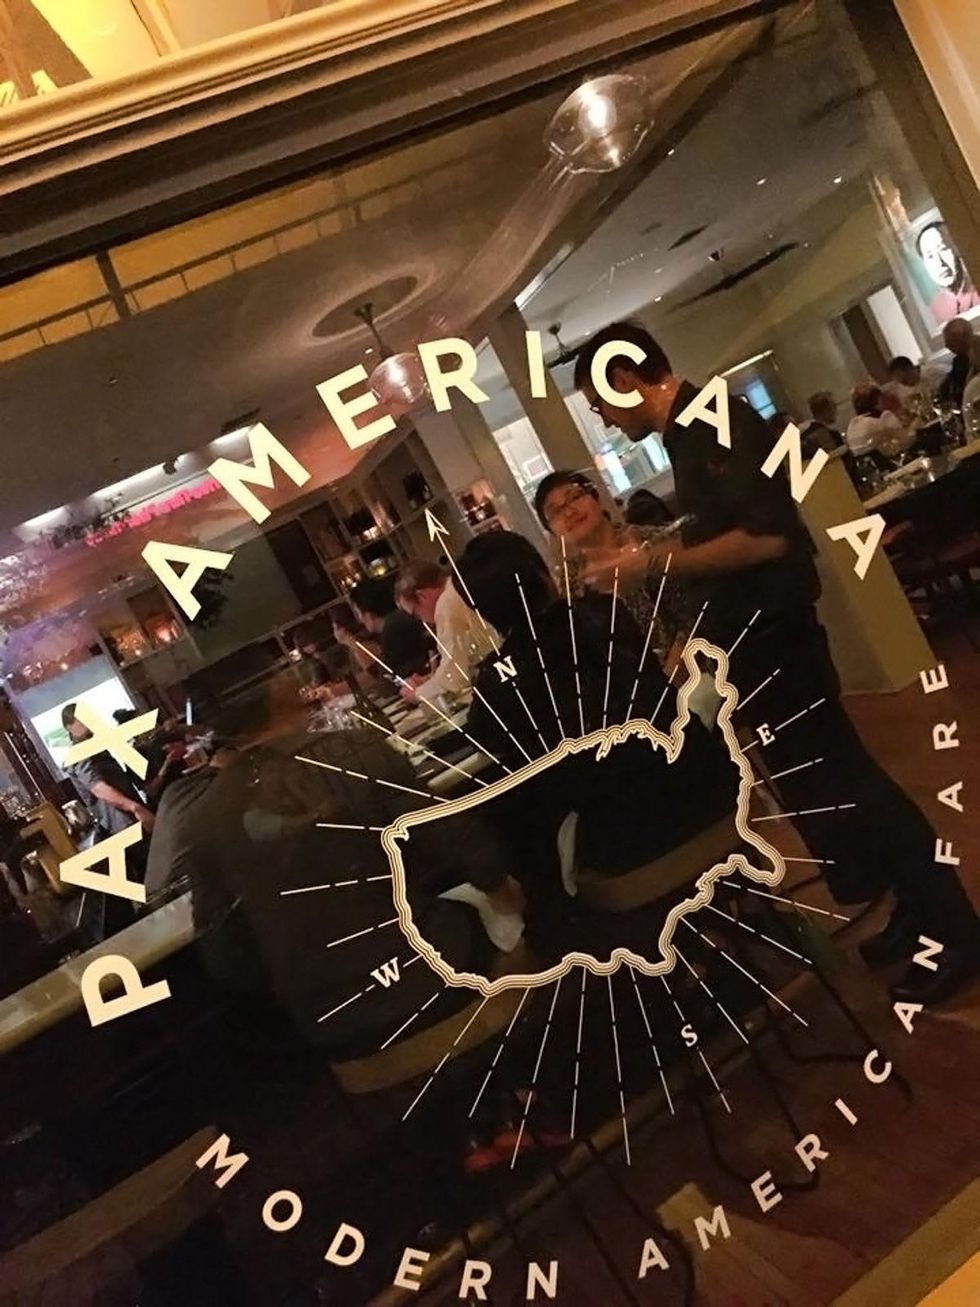 Pax Americana sign on window looking inside November 2014